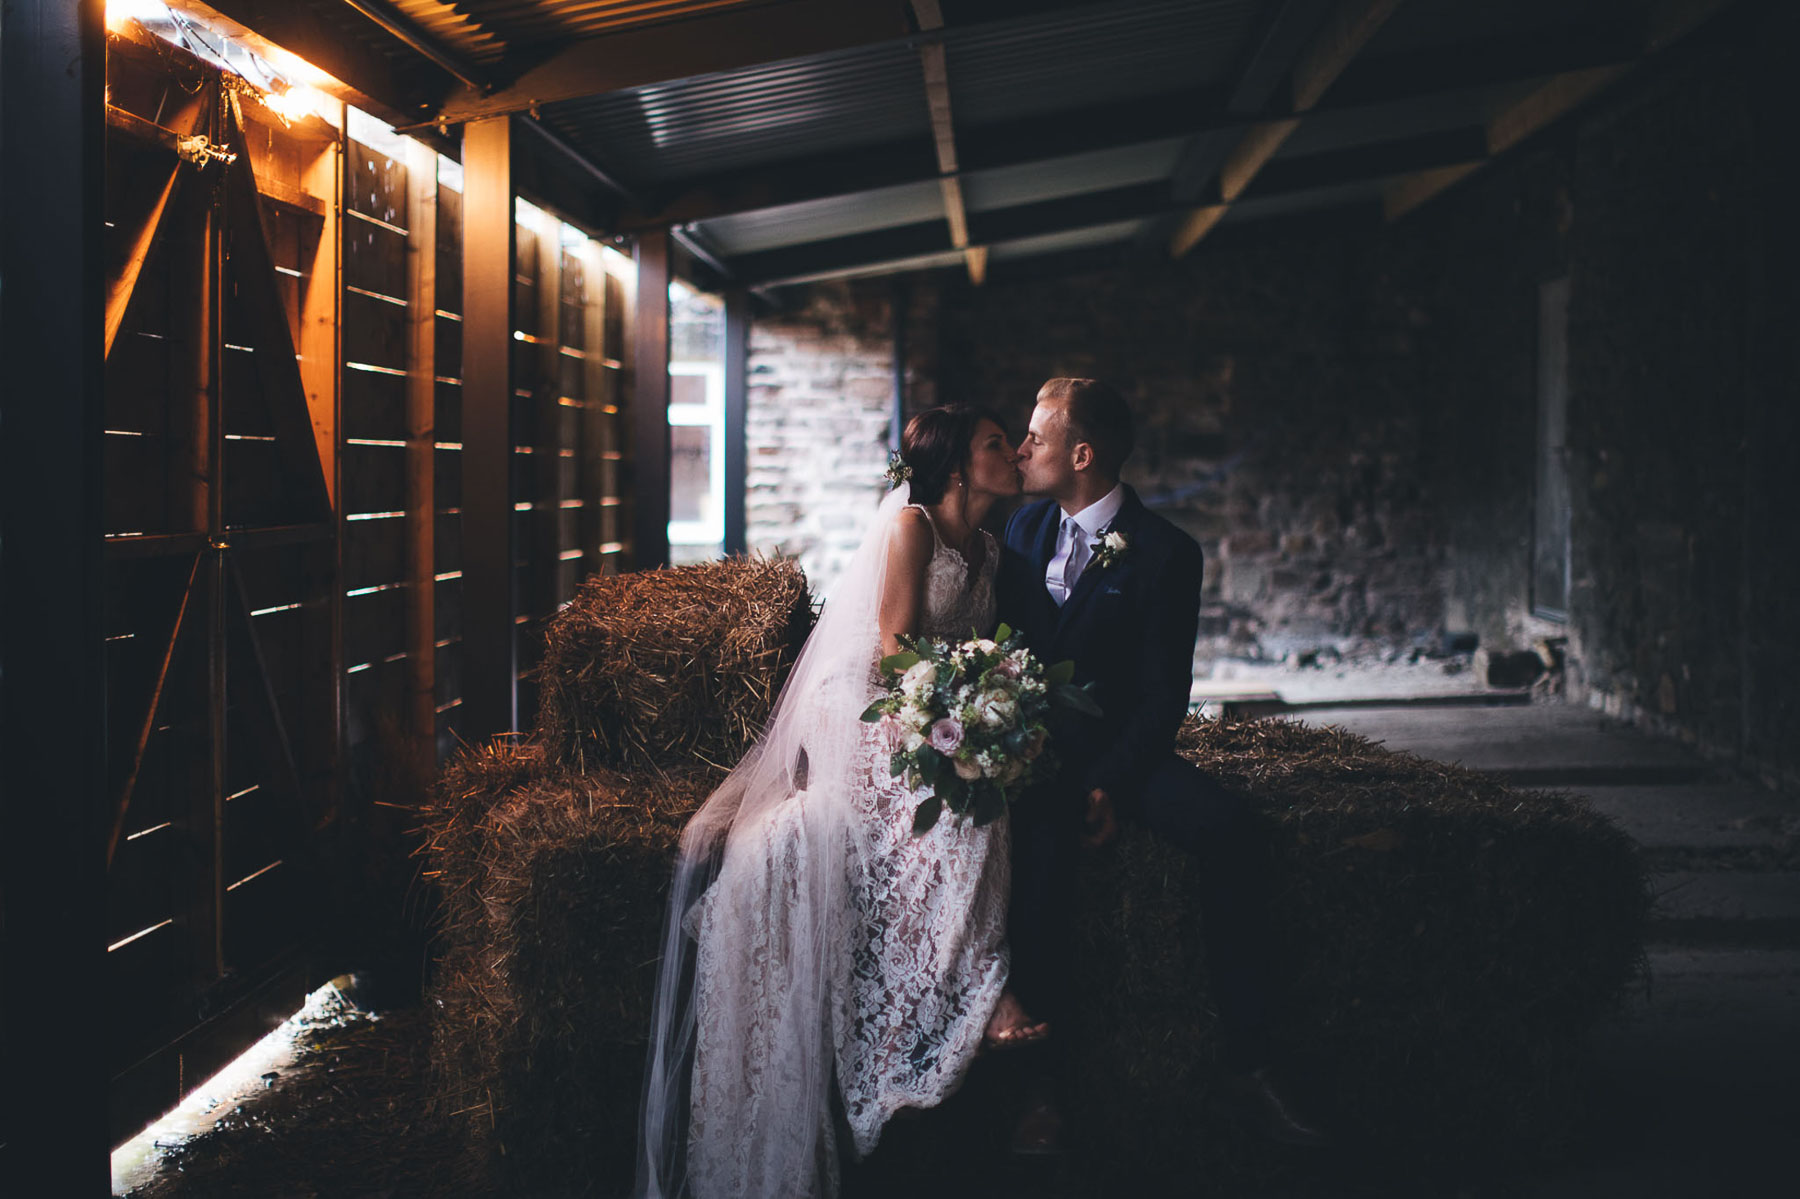 couple kiss in barn conversion for wedding venue